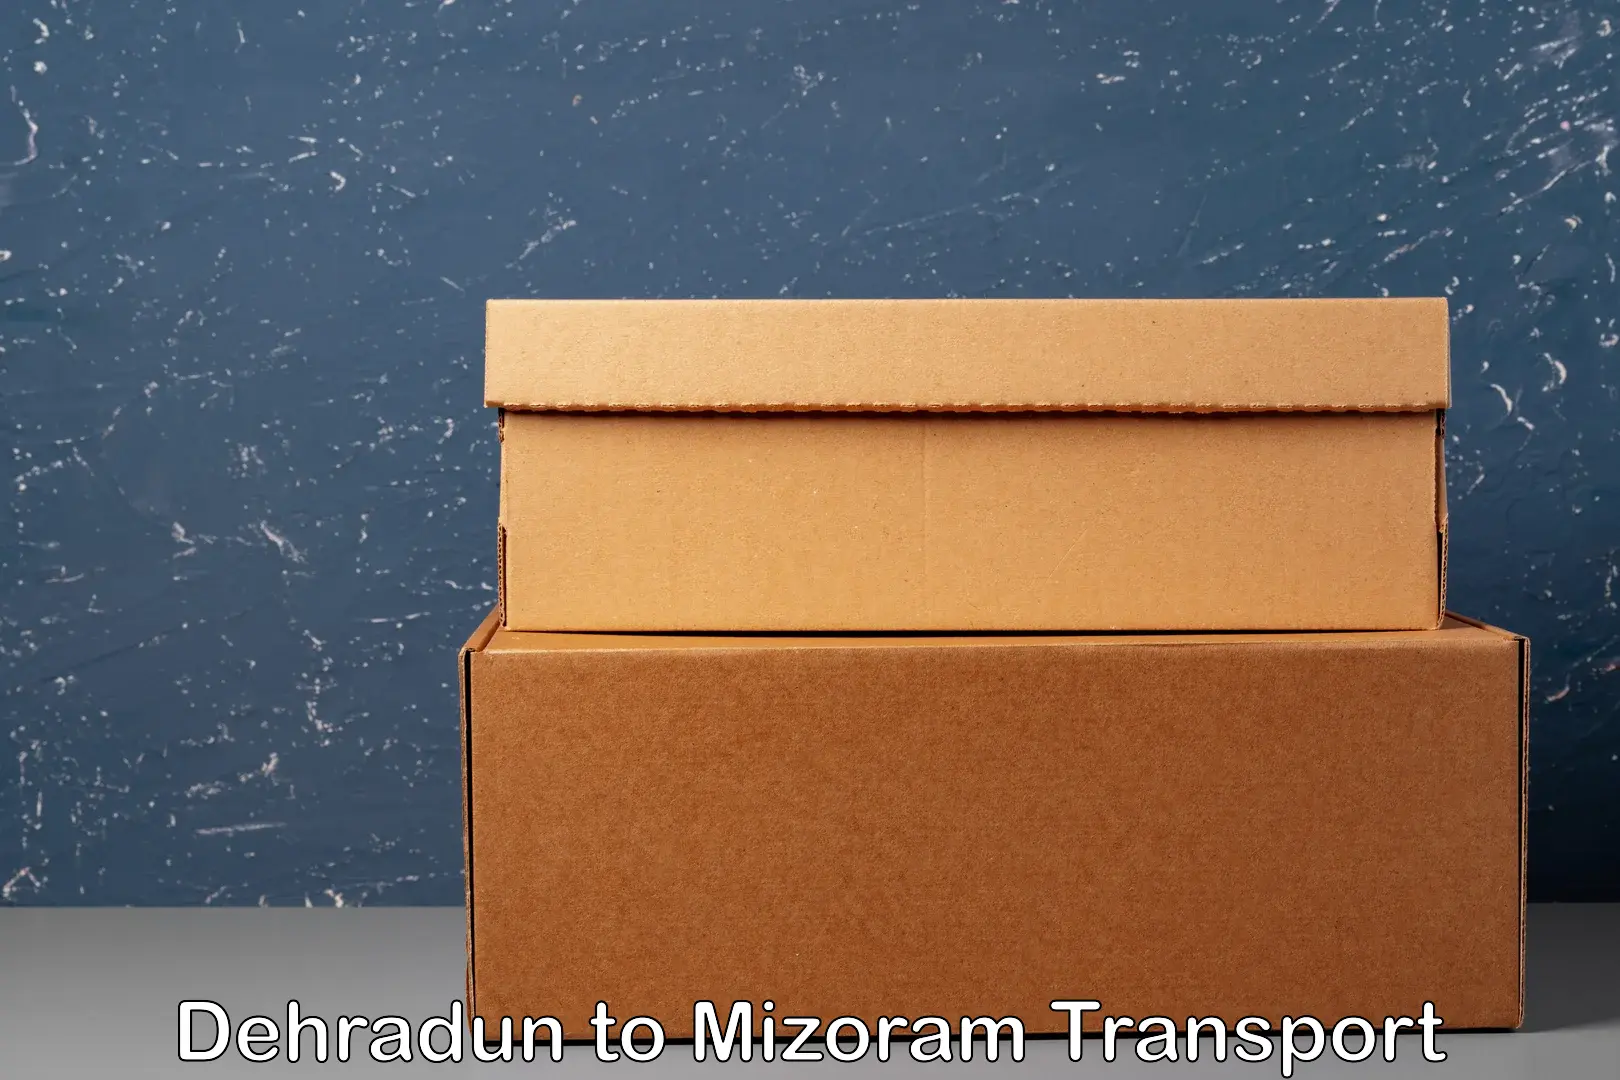 Sending bike to another city Dehradun to Mizoram